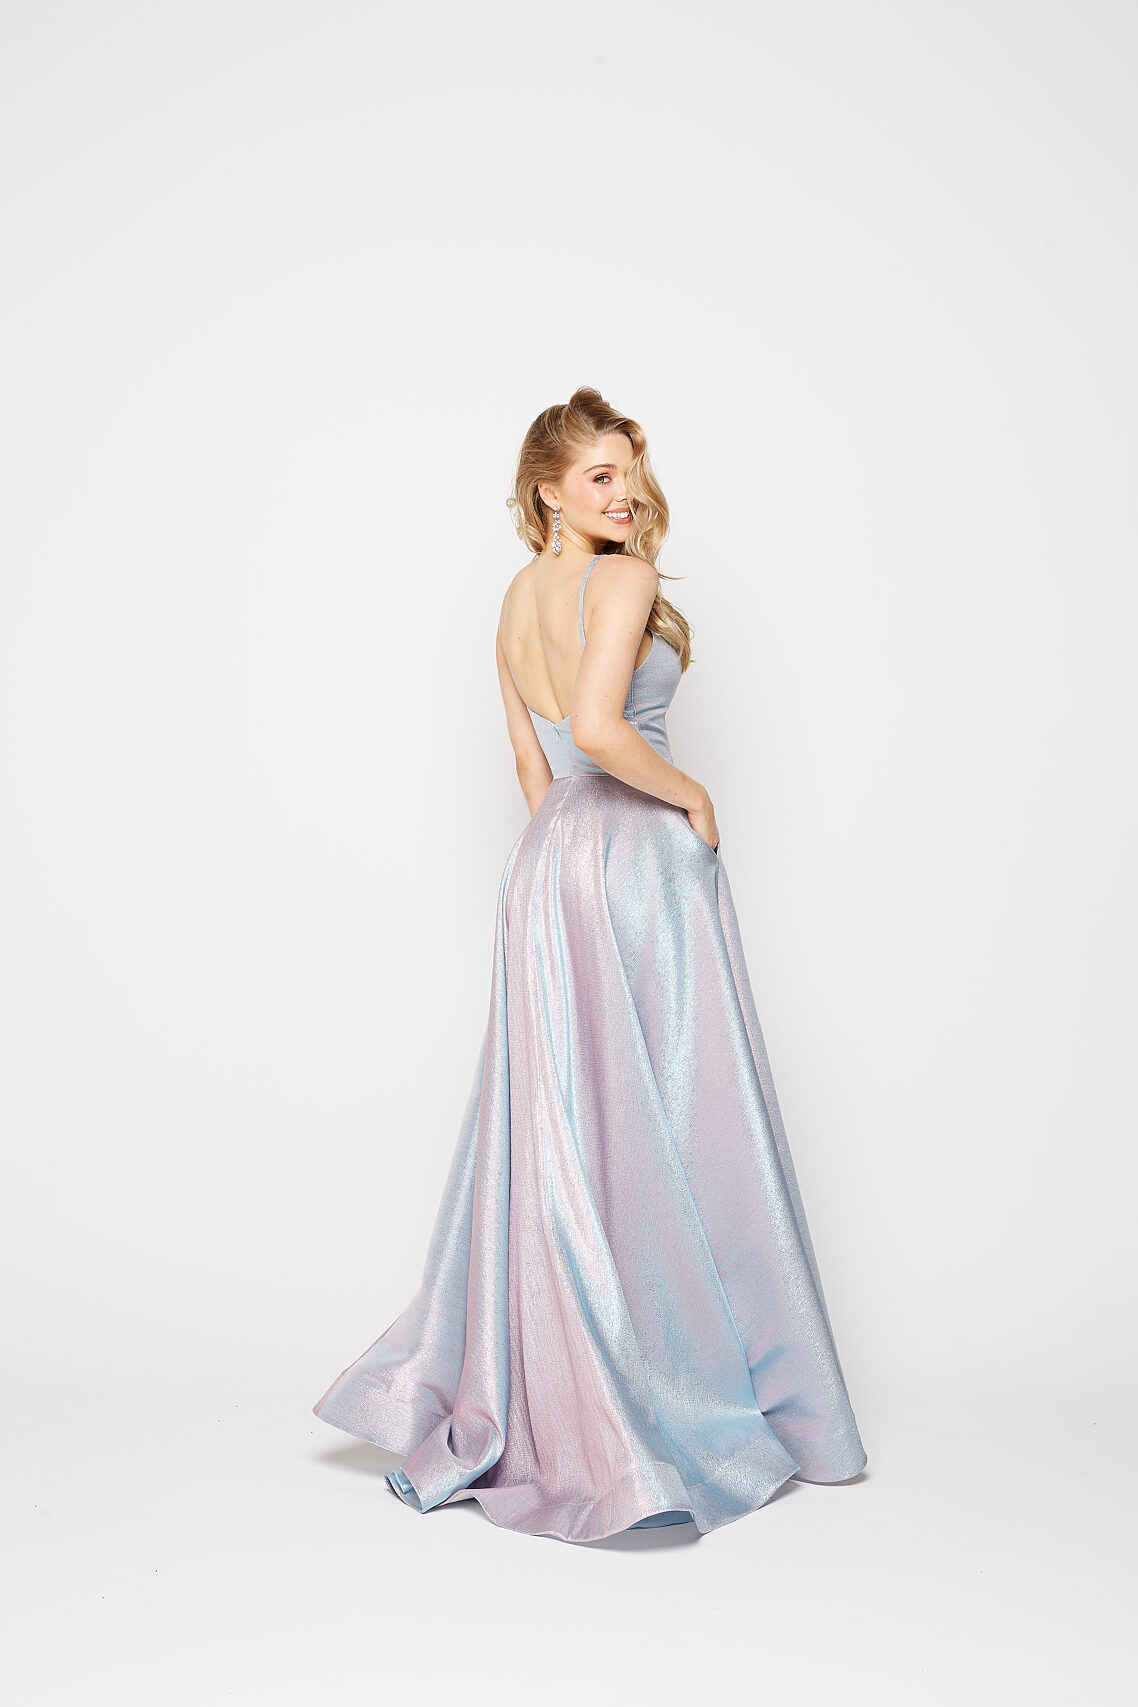 Valerie Formal Dress - PO880 - Tania Olsen Designs